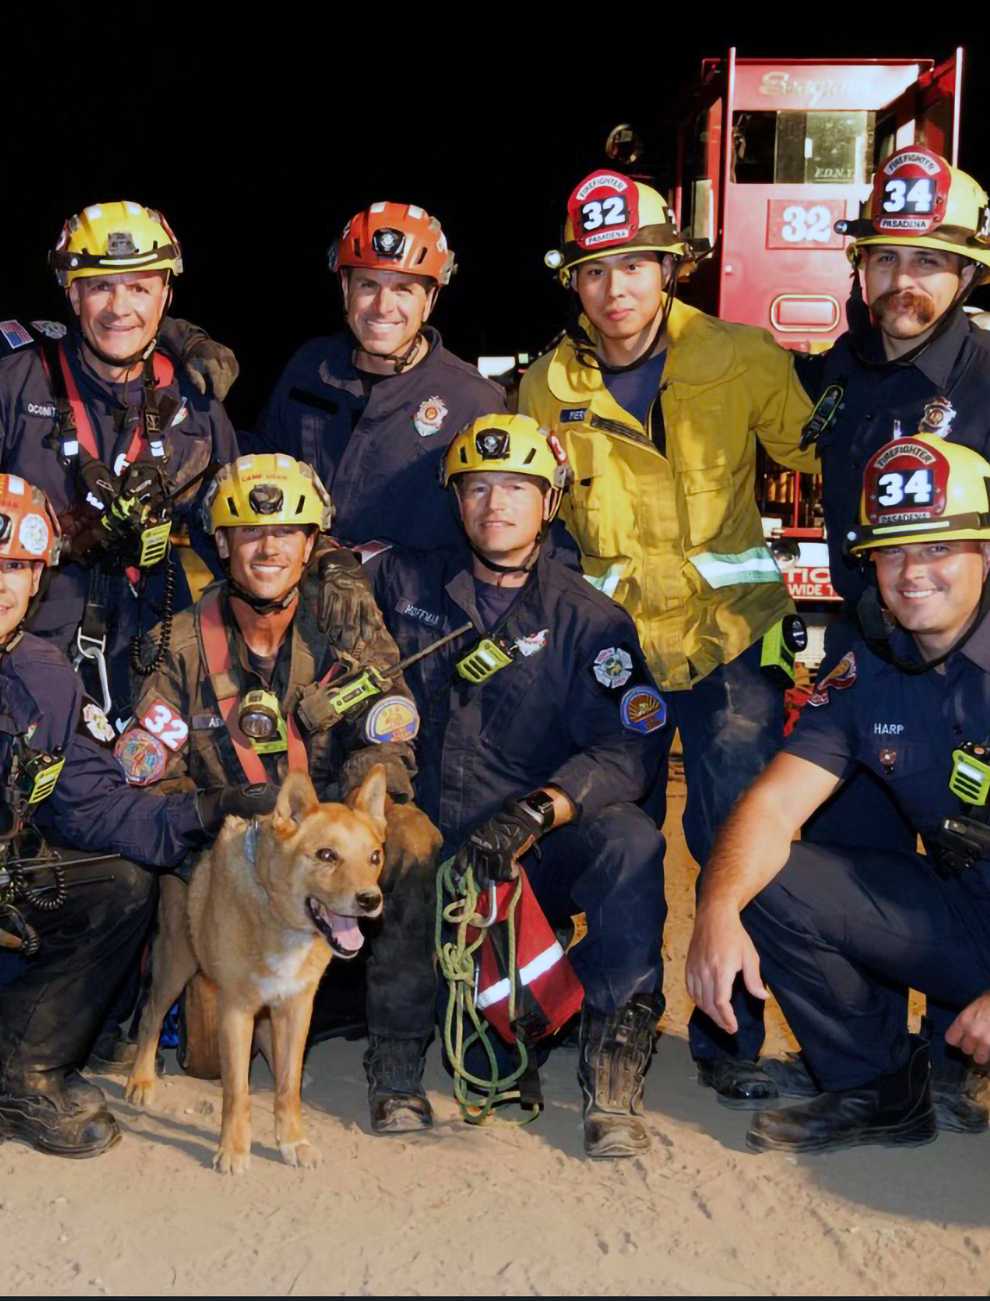 (Pasadena Fire Department via AP)